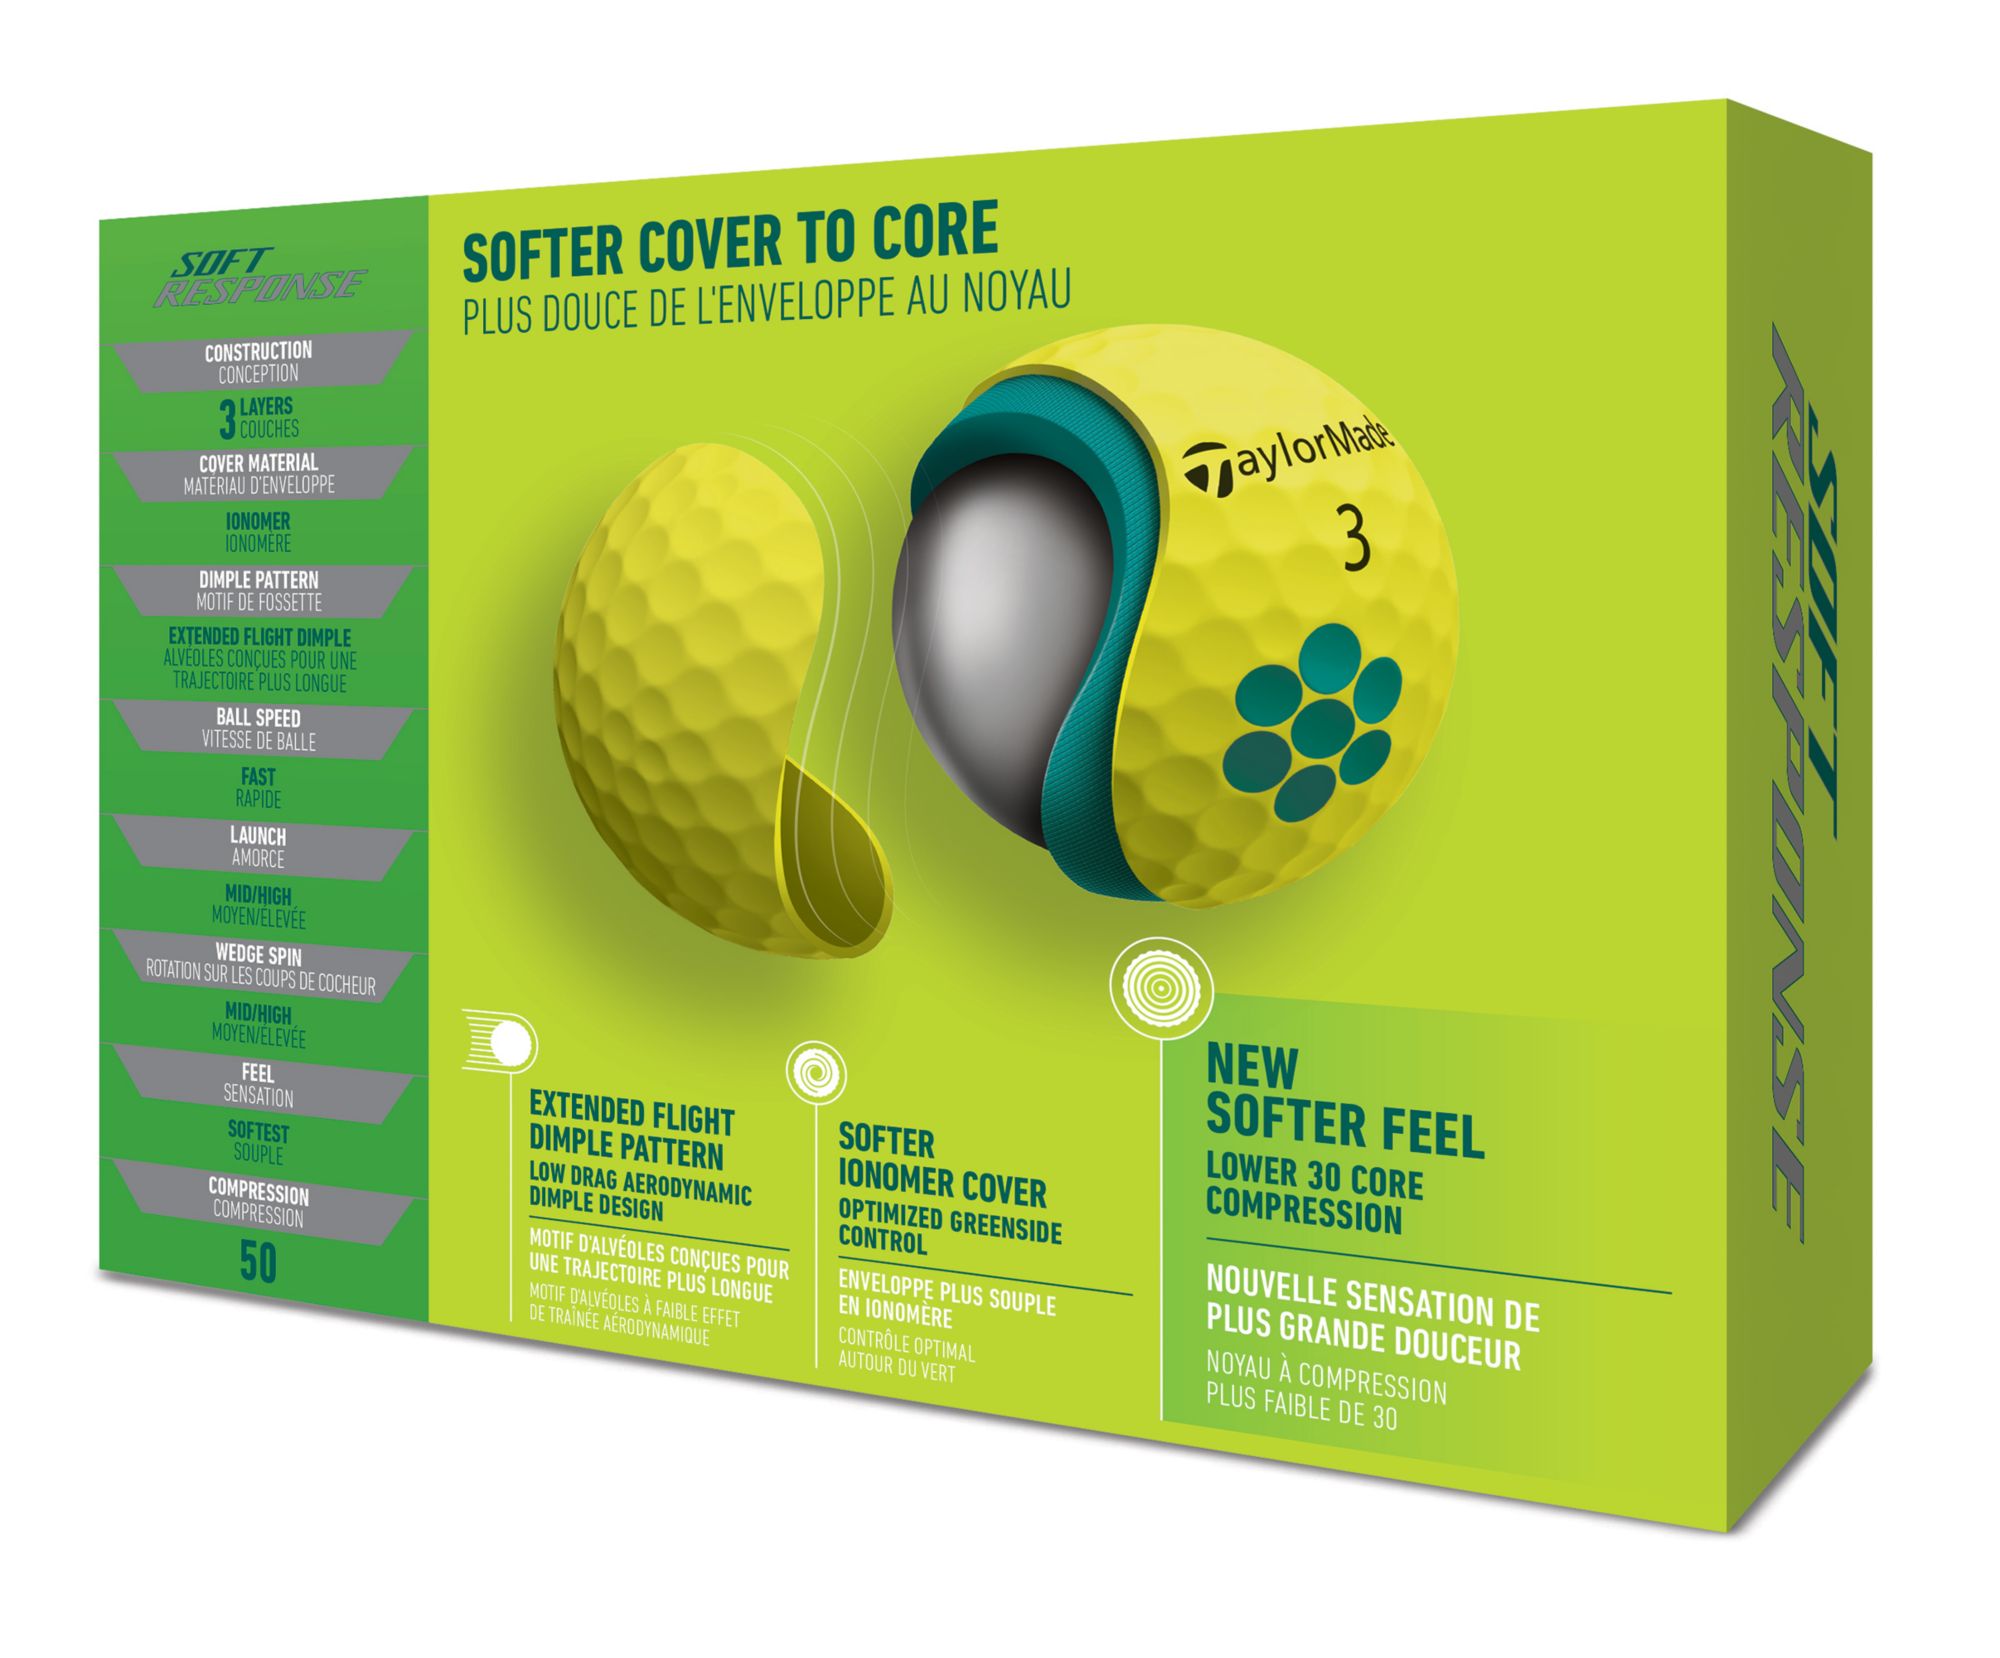 TaylorMade 2022 Soft Response Golf Balls